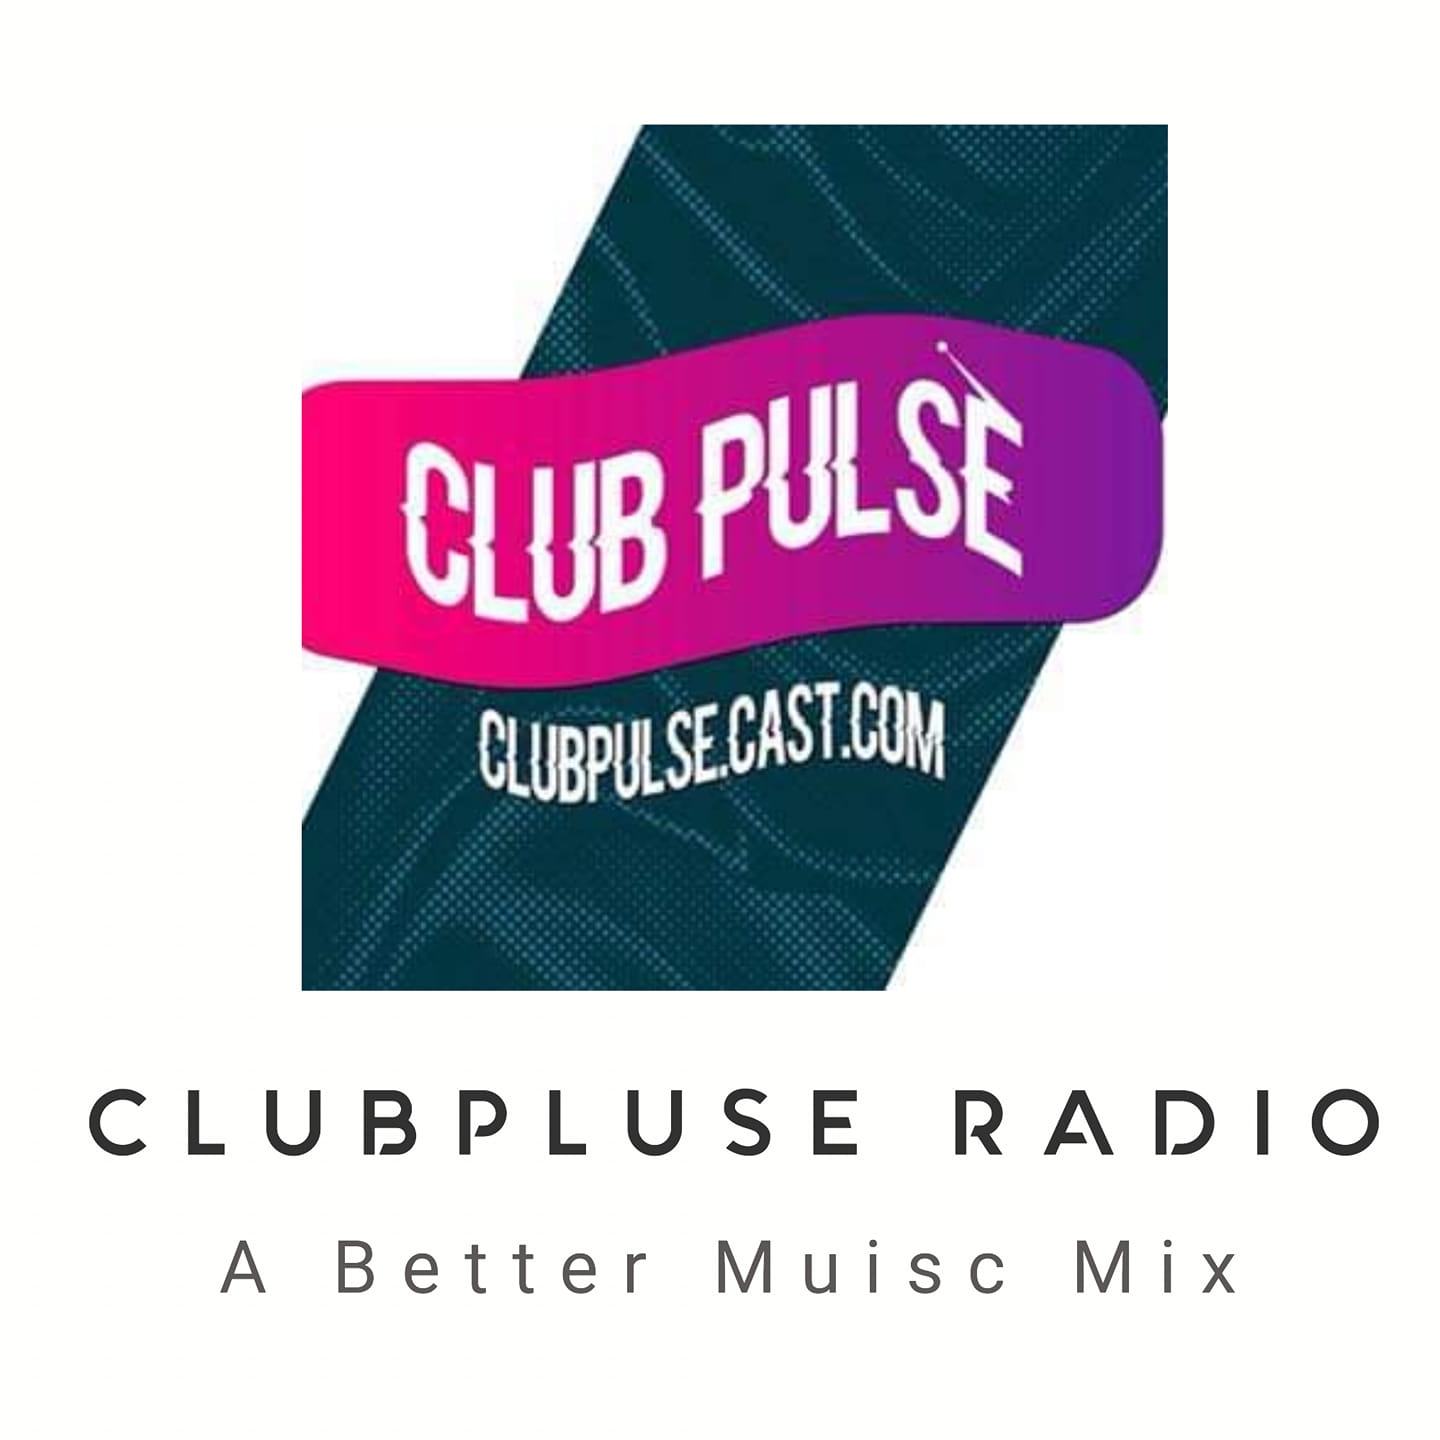 Clubpluse Radio